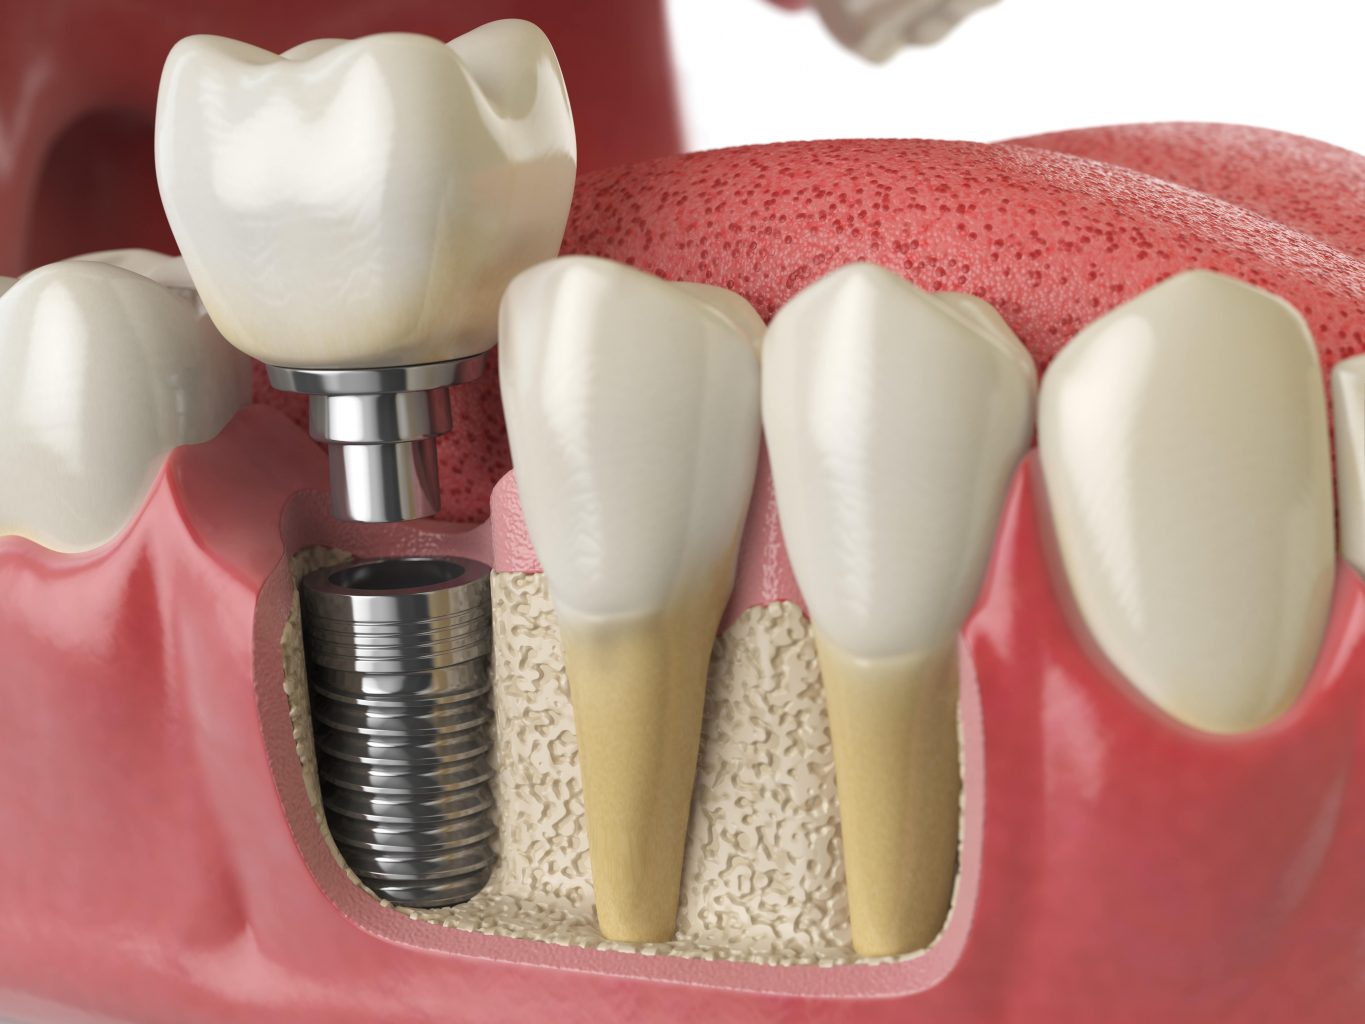 Diagram showing dental implants with titanium posts.